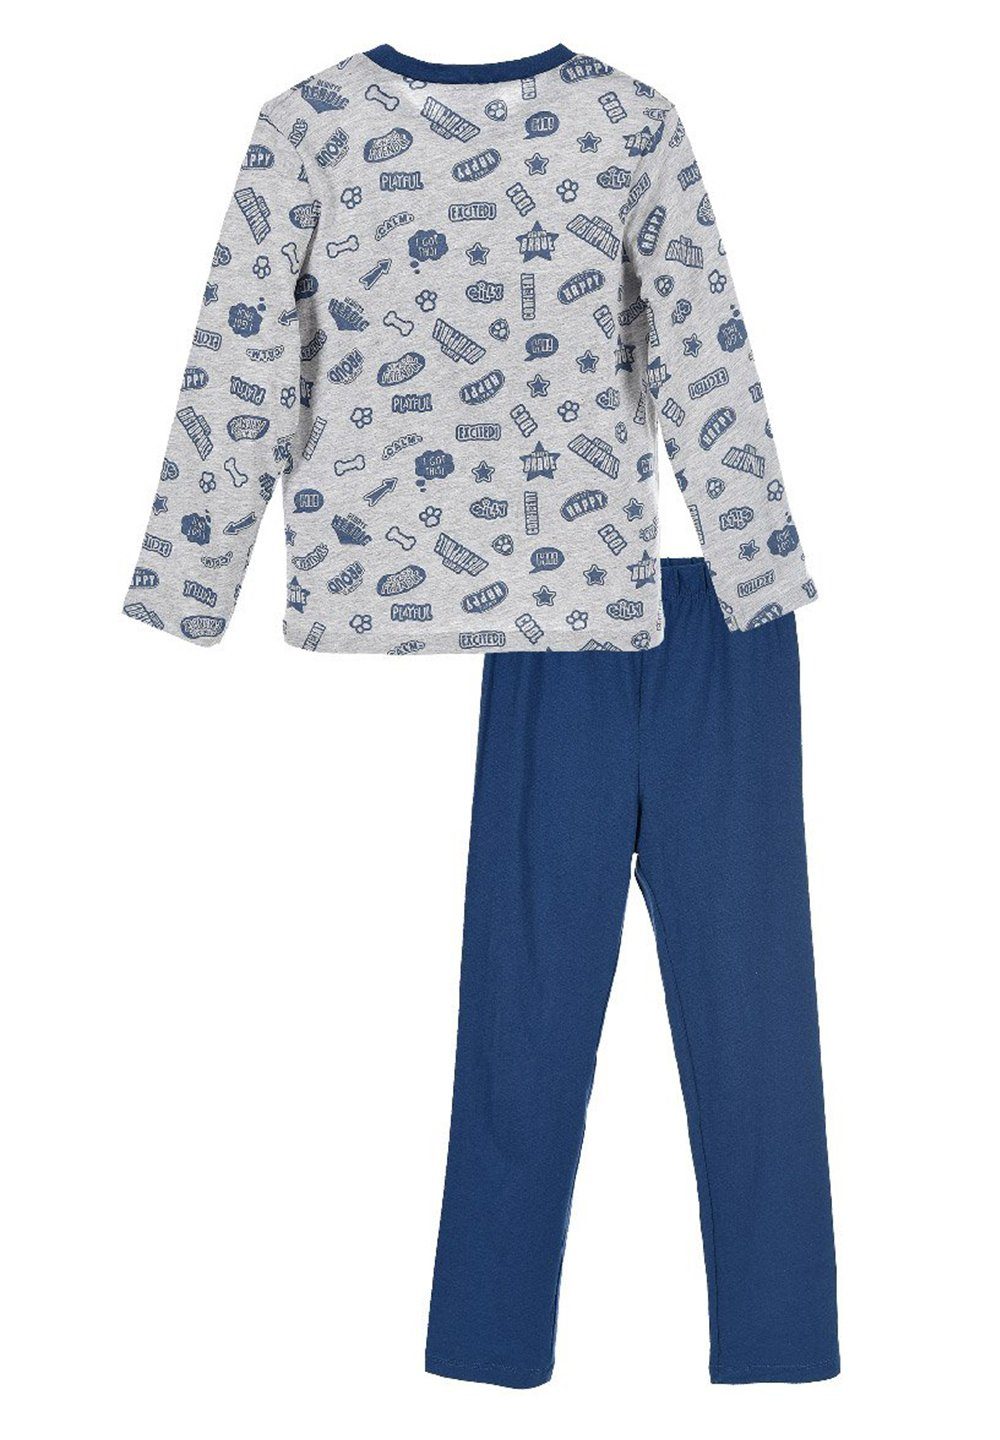 Marshall Grau Nachtwäsche Pyjama PATROL PAW langarm Kinder Schlafanzug Jungen